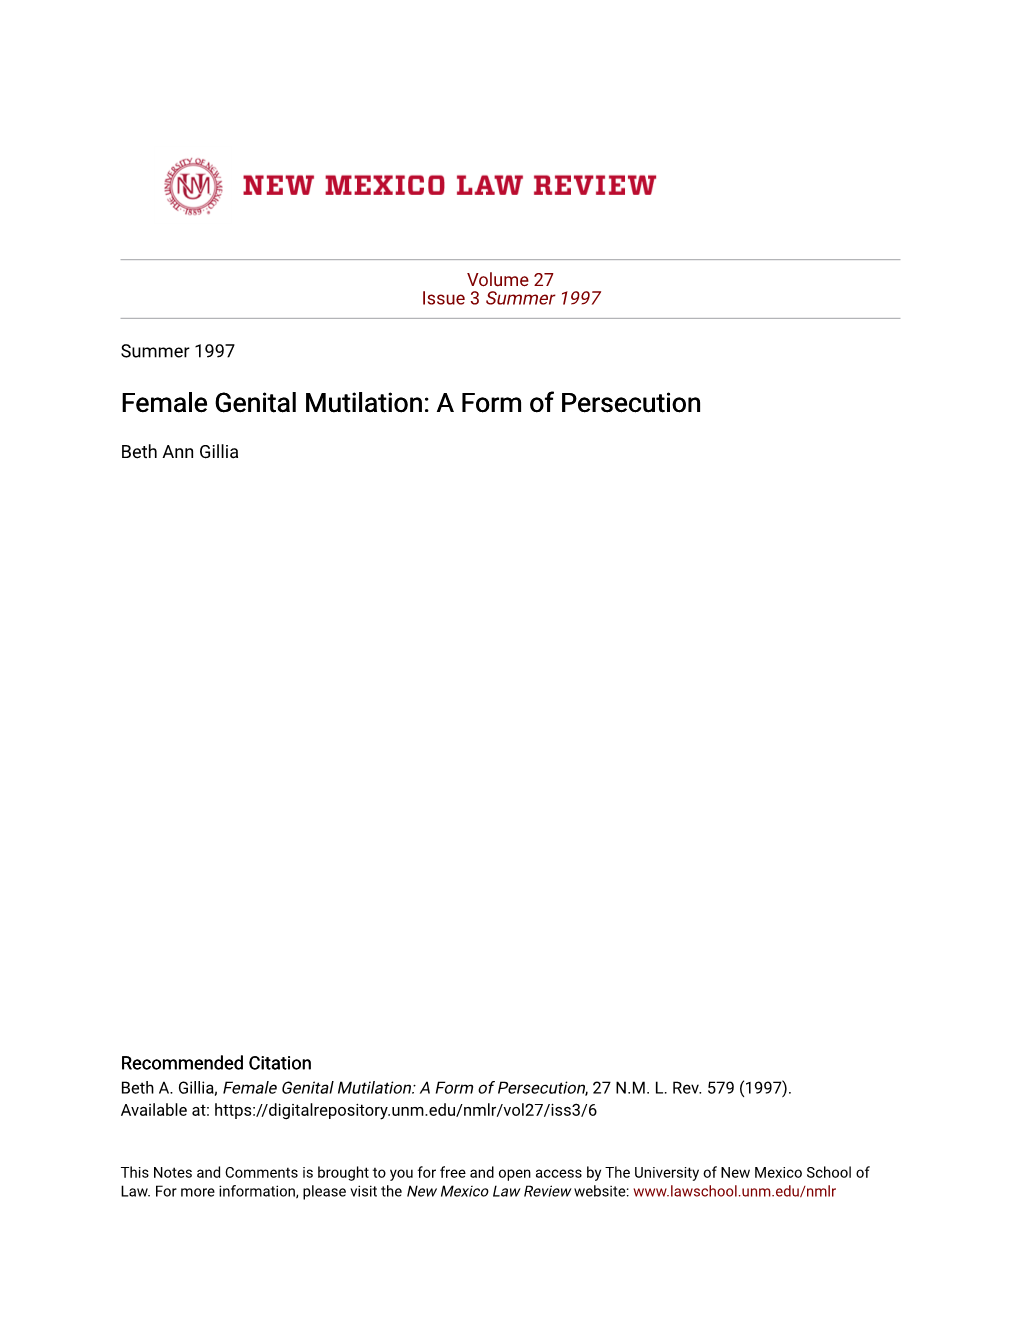 Female Genital Mutilation: a Form of Persecution